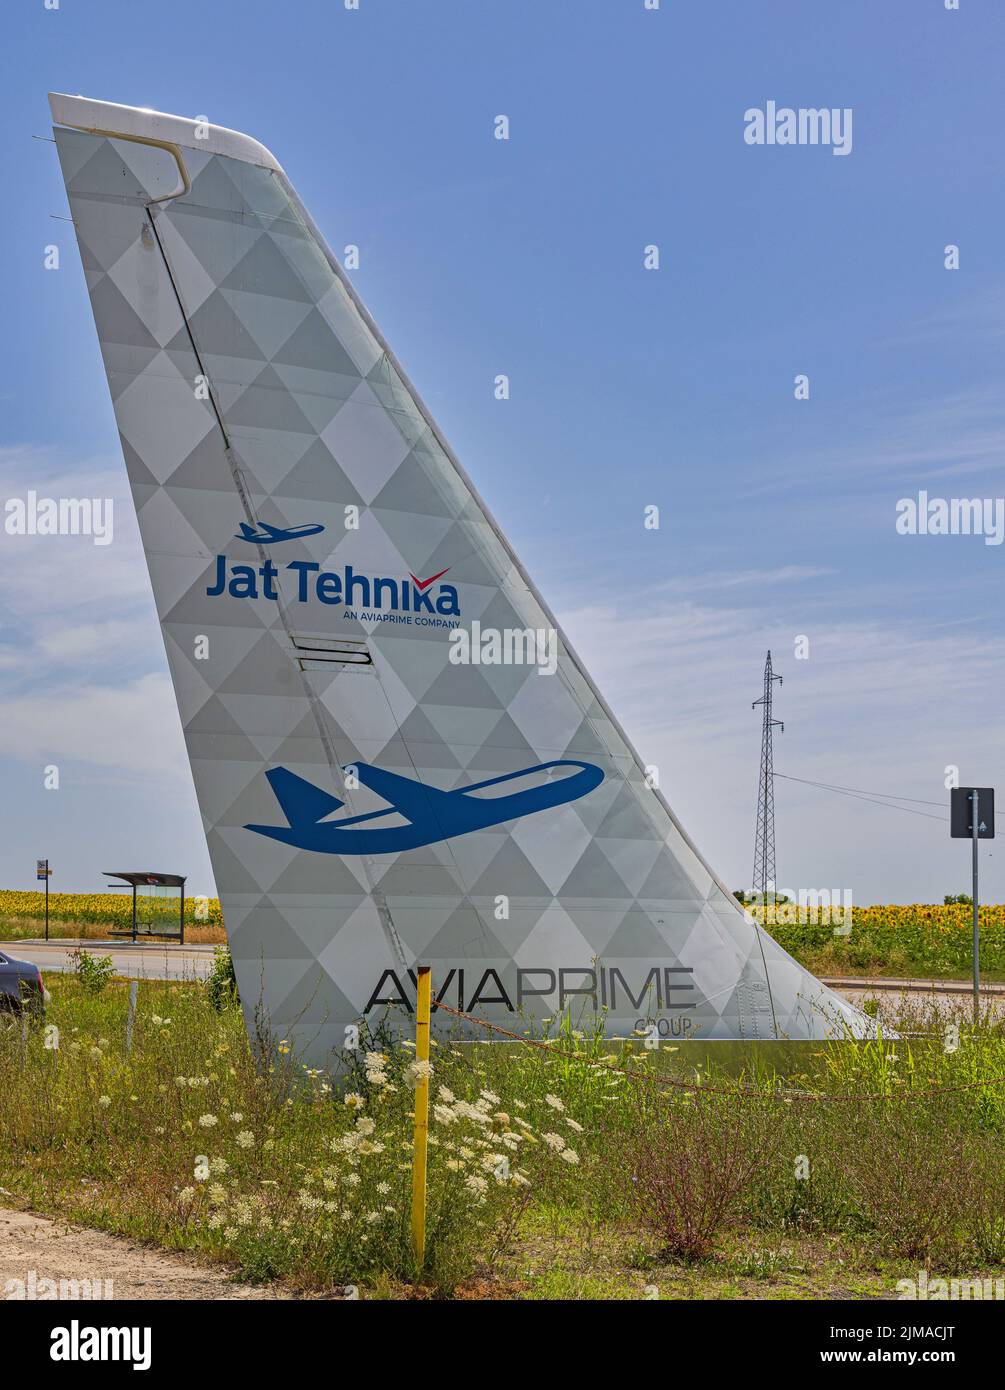 Belgrade, Serbia - June 29, 2022: Jat Tehnika by Aviaprime Group Serbian Aerospace Company at Nikola Tesla Airport Maintenace. Stock Photo